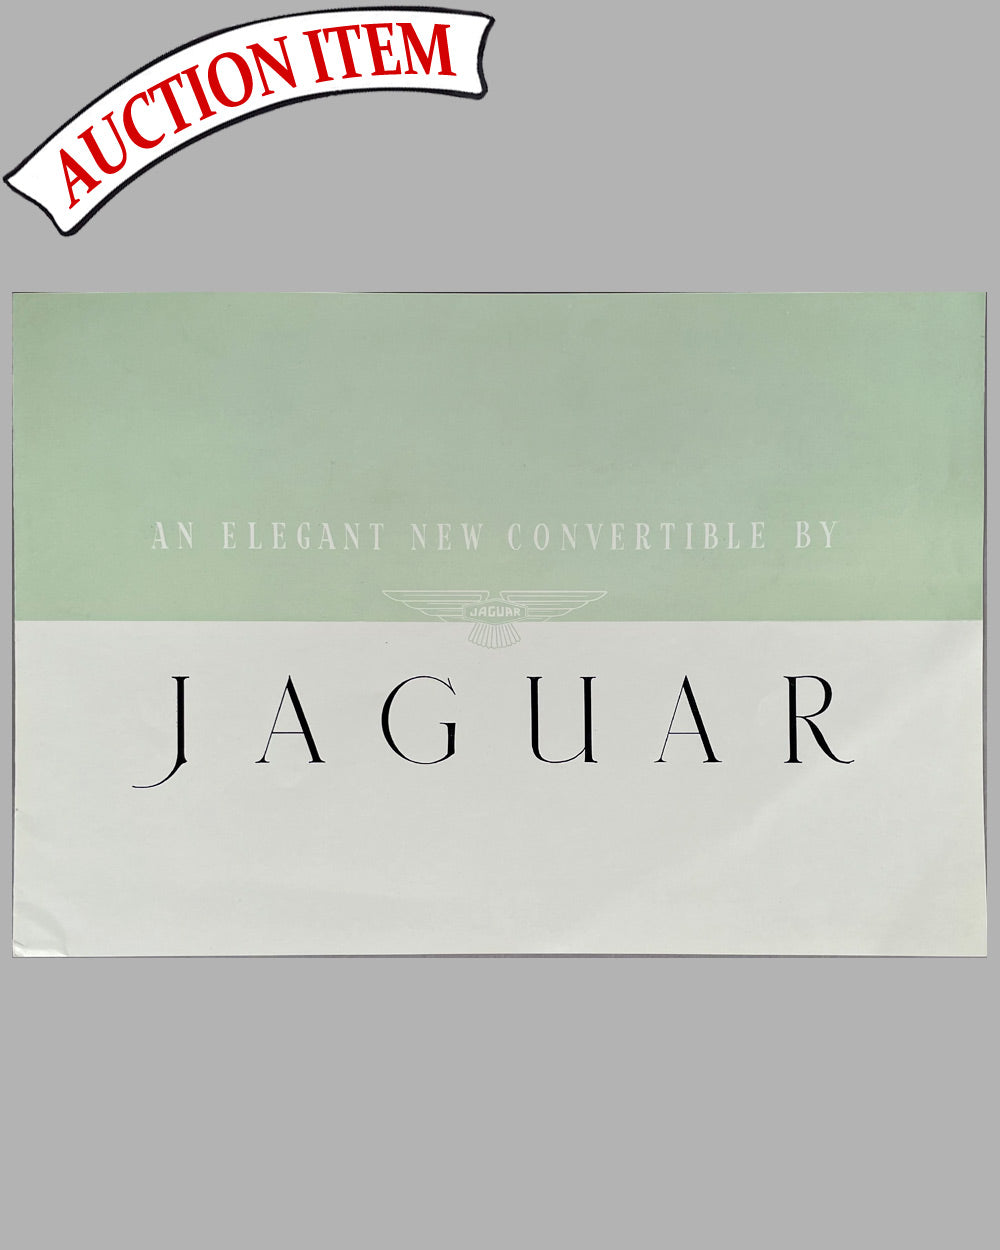 4 - Jaguar XK120 convertible factory sales brochure, early 1950’s